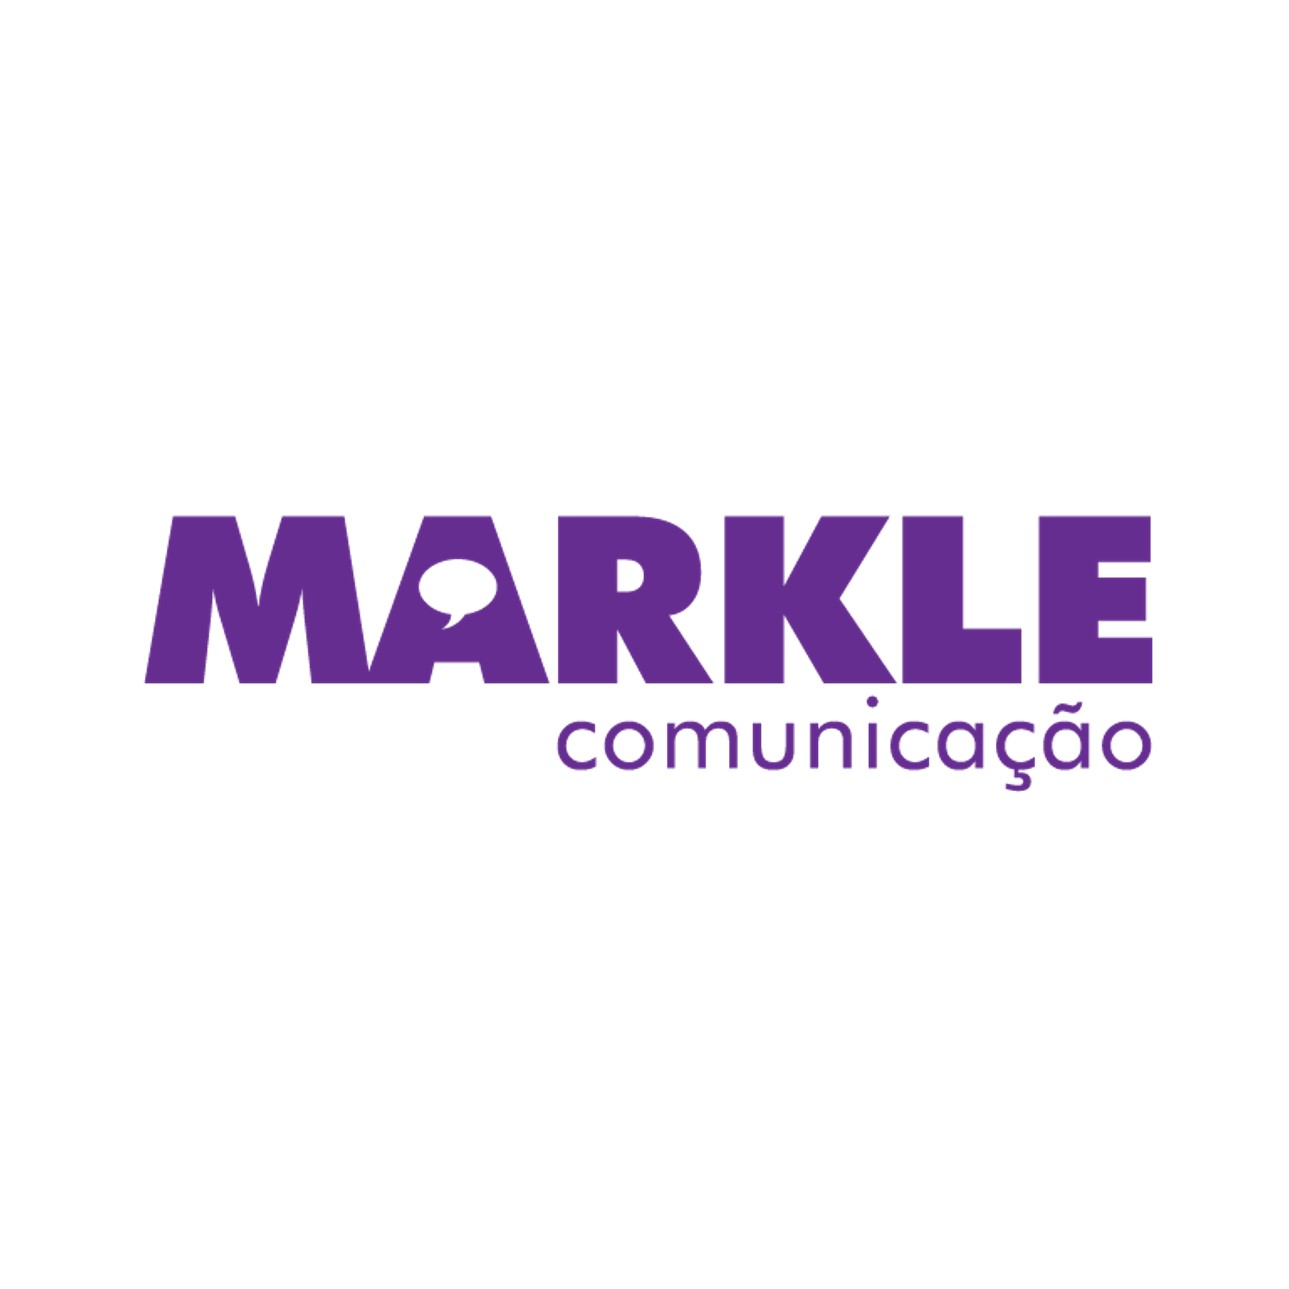 Markle